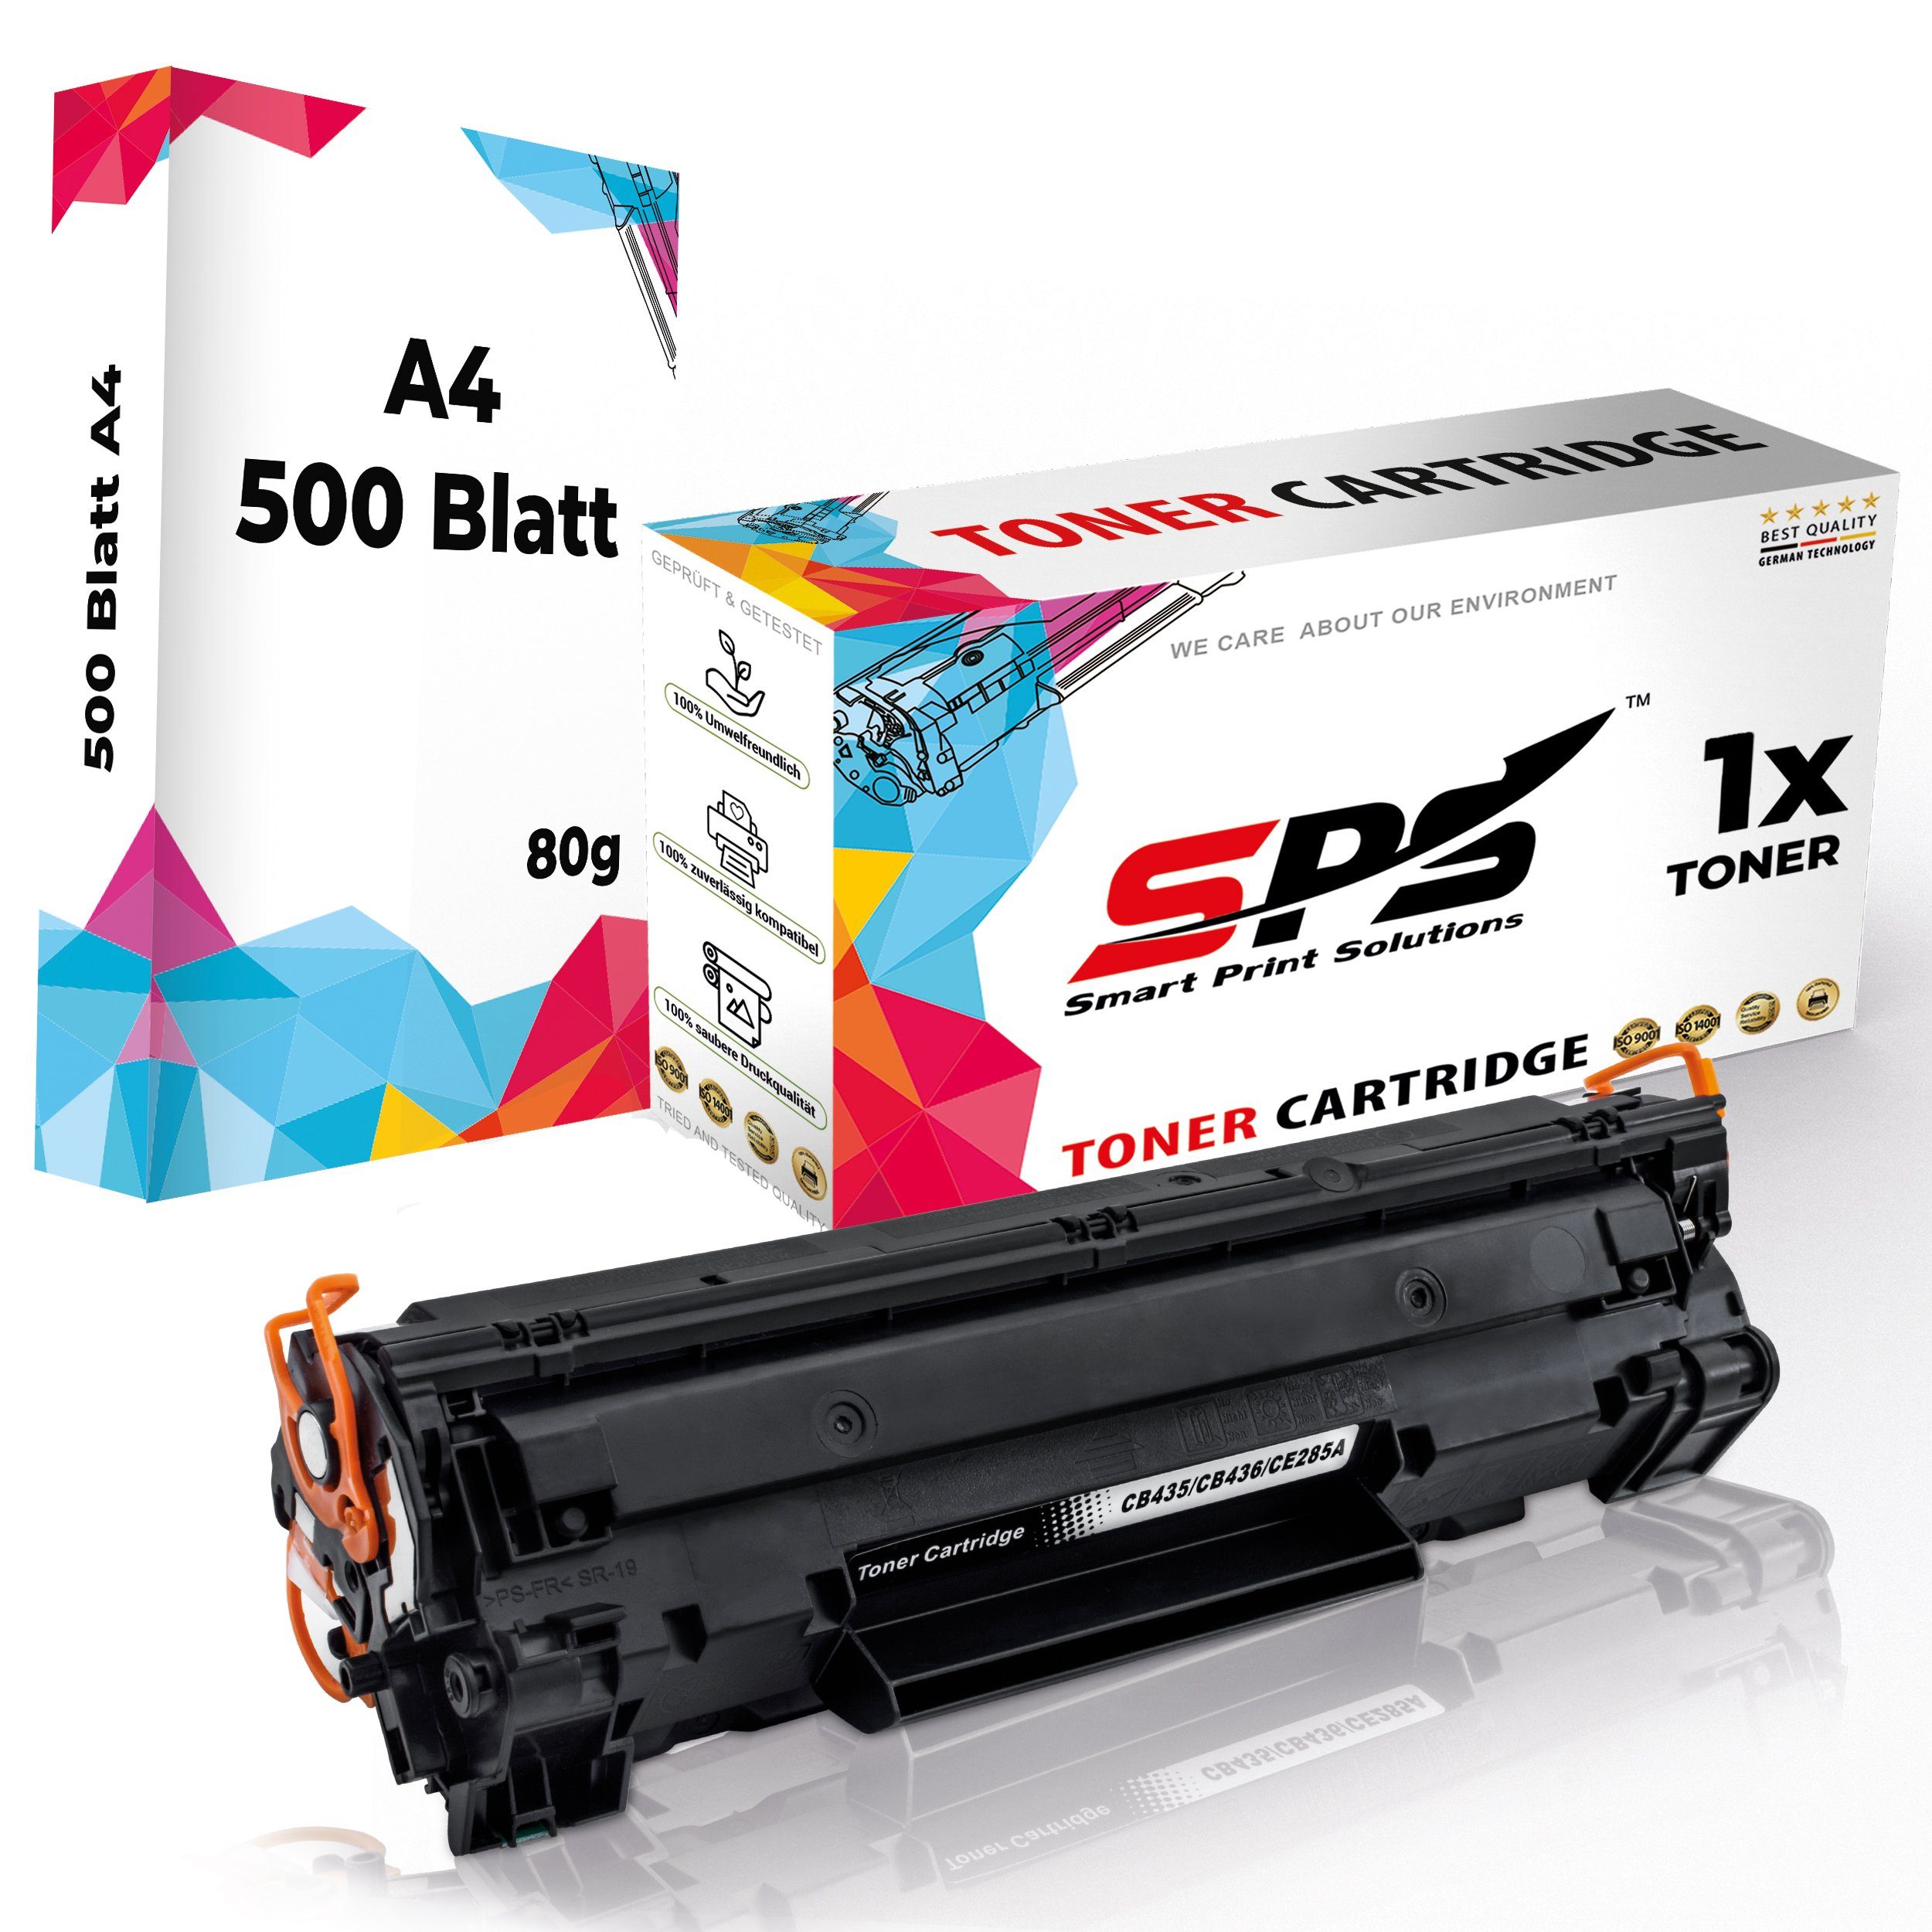 Pro P1108 Papier, für Laserjet + A4 85A Pack Toner (1x Kompatibel Schwarz) CE285A, HP SPS 1x Tonerkartusche (1er